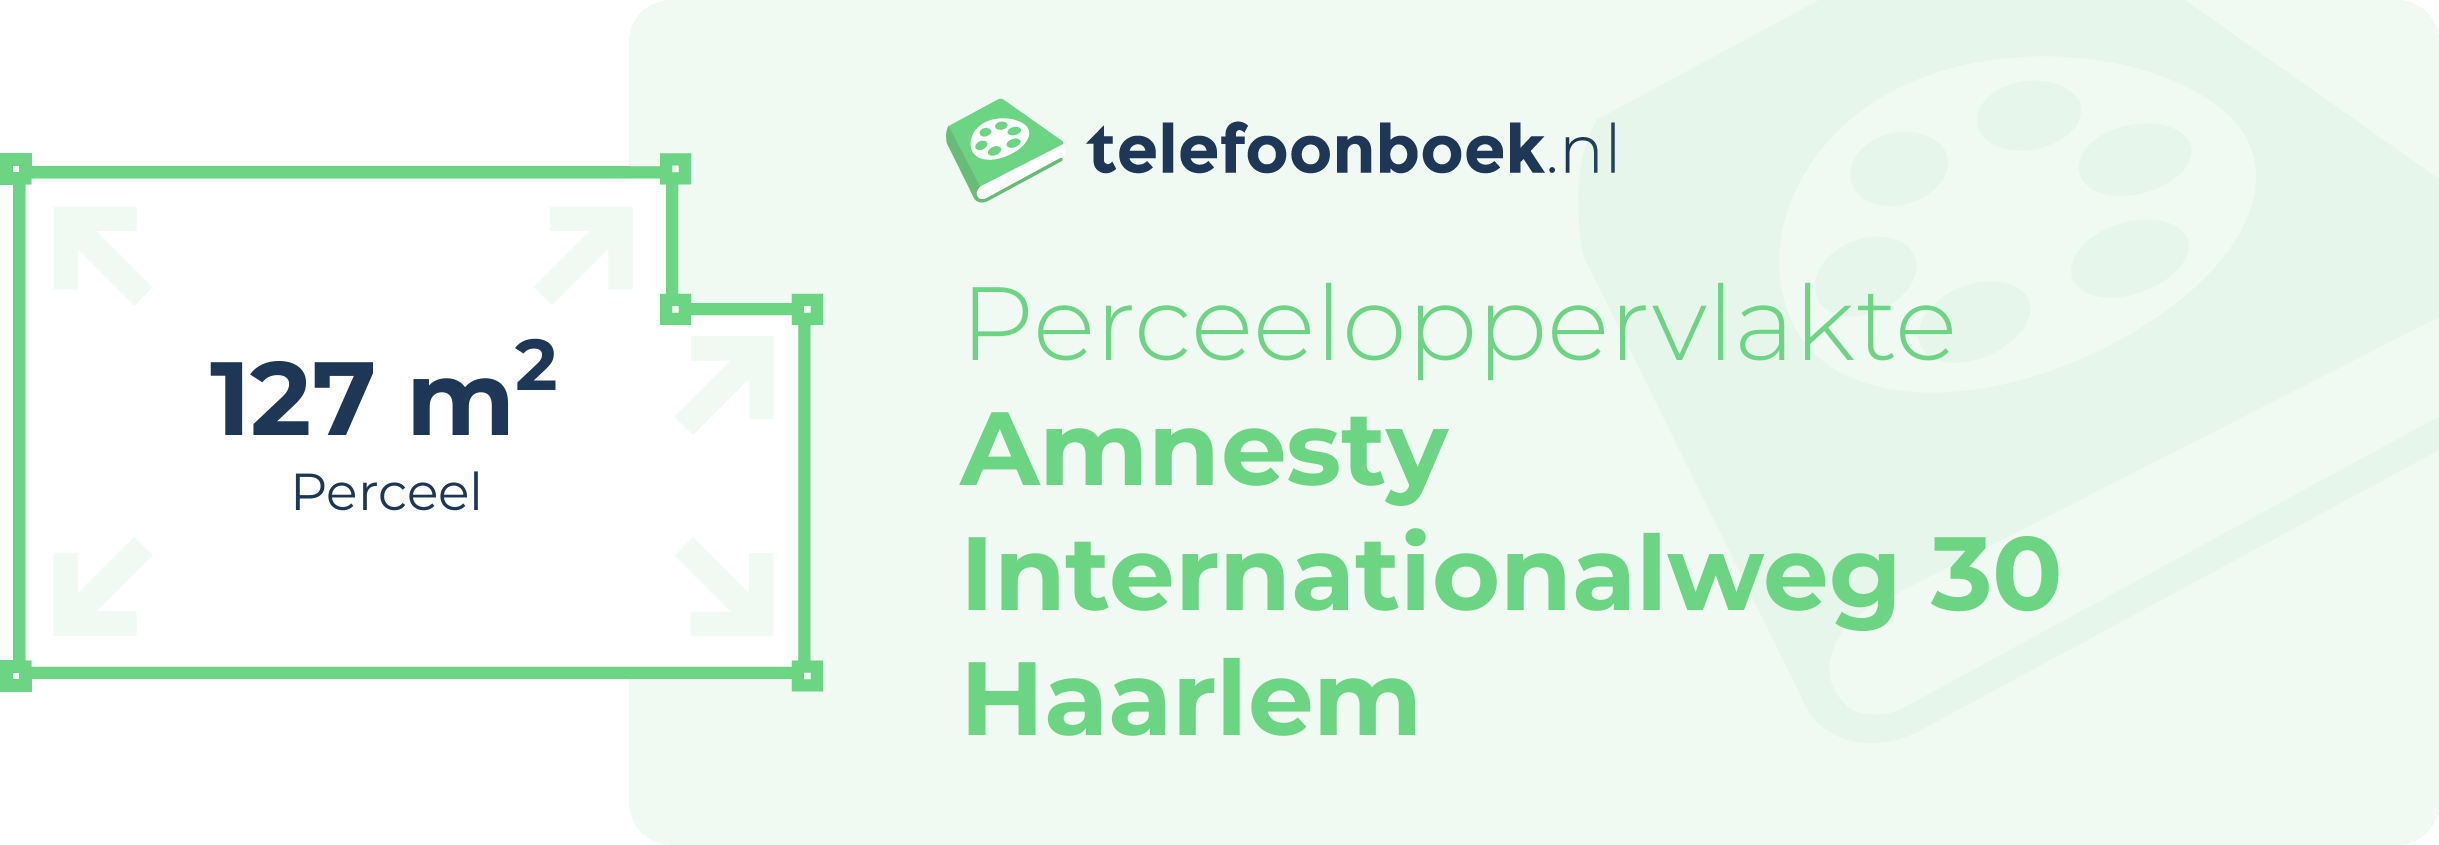 Perceeloppervlakte Amnesty Internationalweg 30 Haarlem